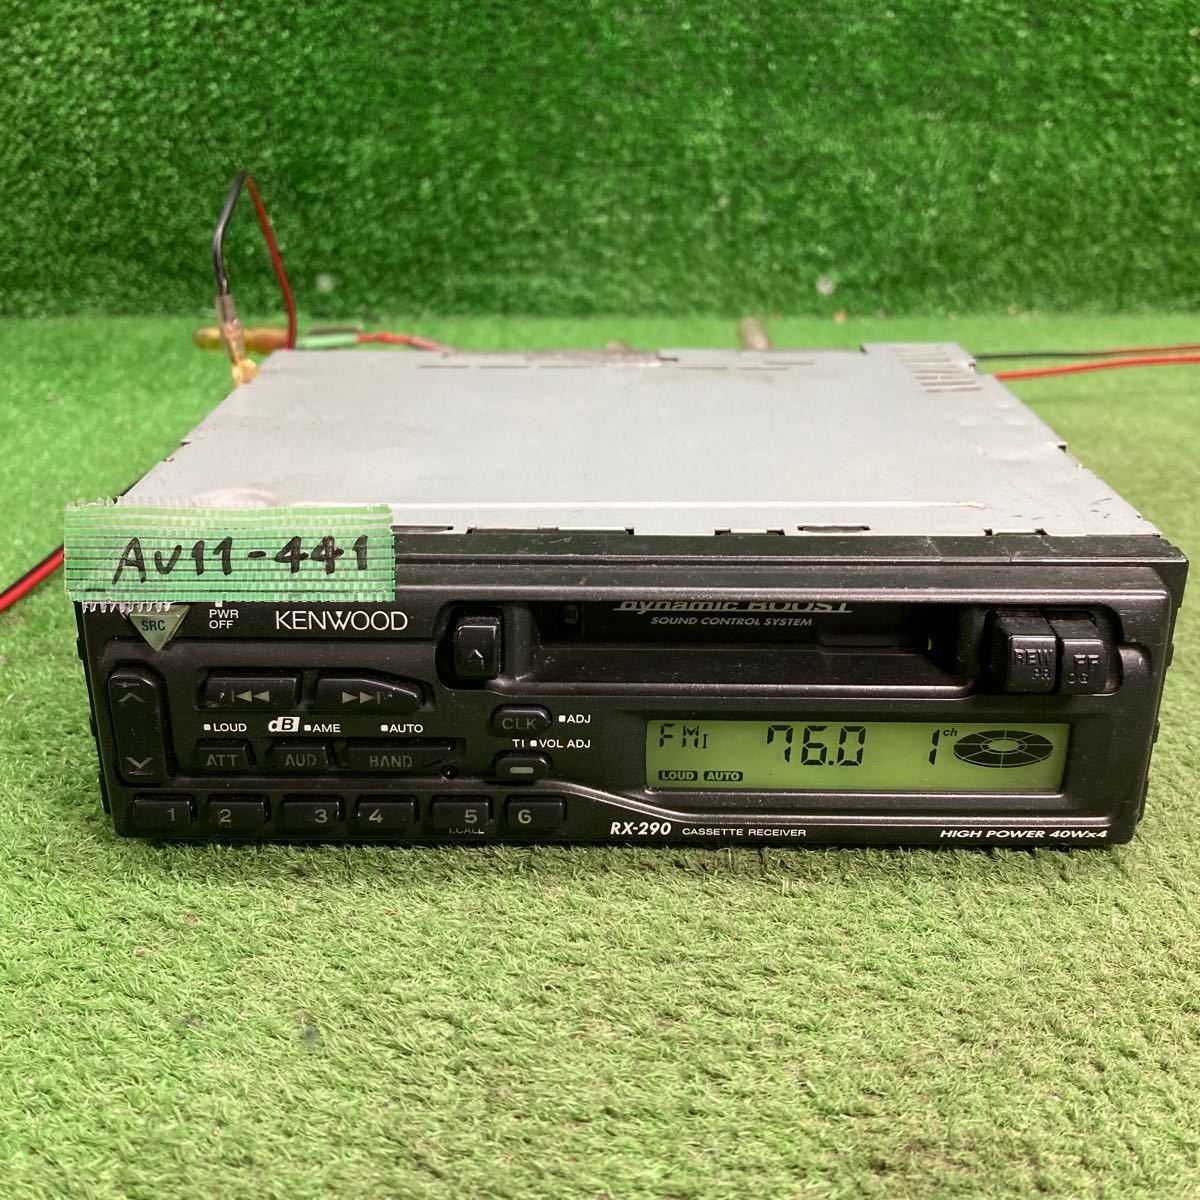 AV11-441 激安 カーステレオ KENWOOD RX-290 80700886 カセット 確認用配線使用 簡易動作確認済み 中古現状品_画像1